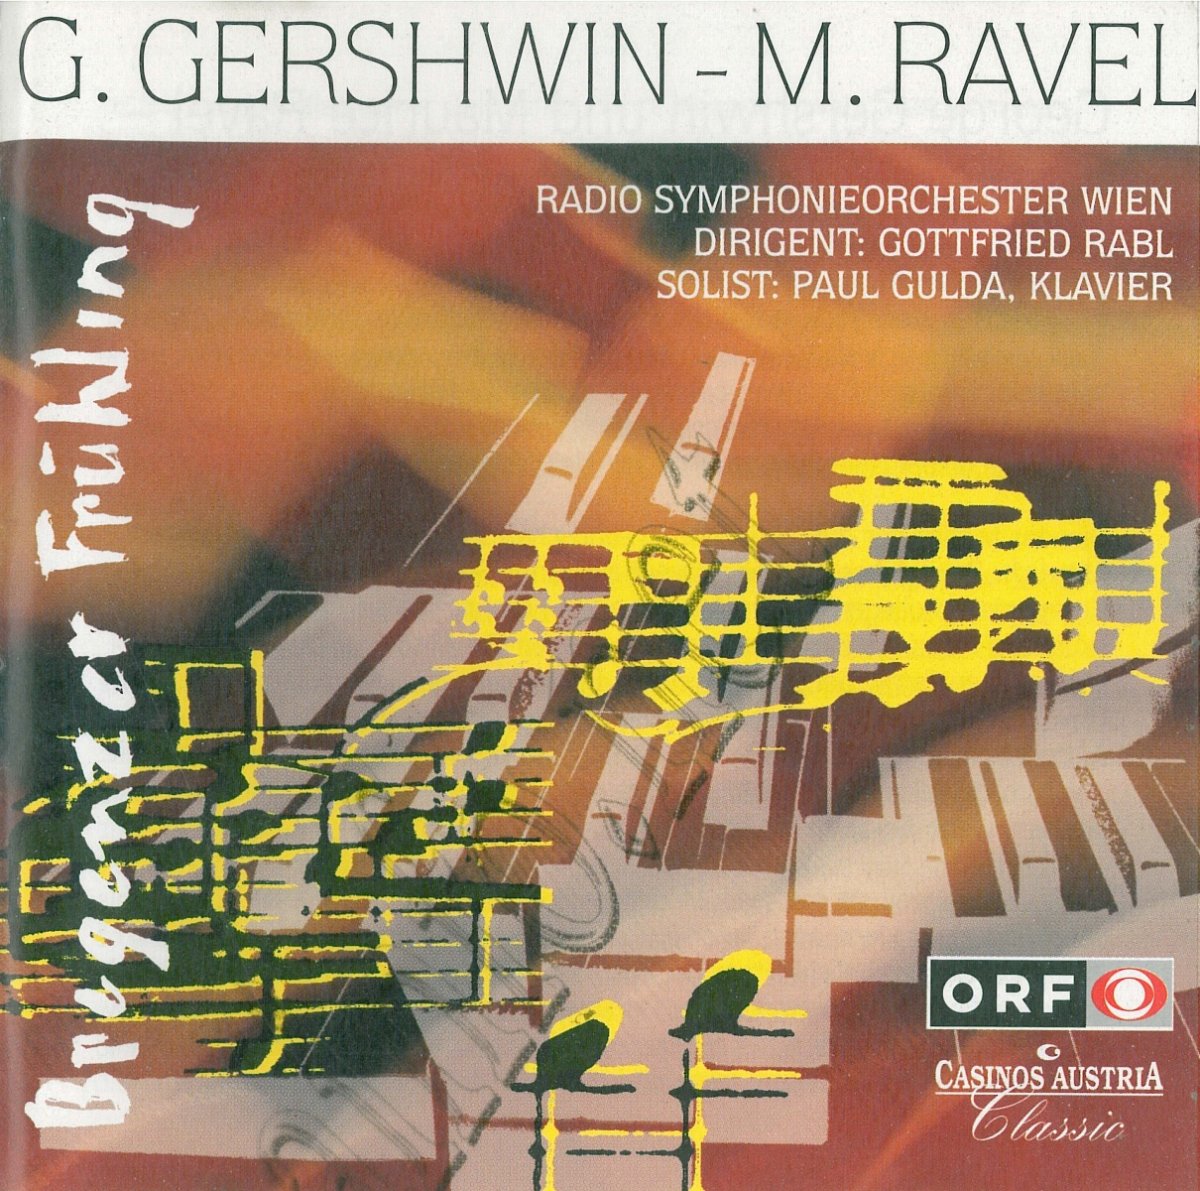 George Gershwin - Maurice Ravel - clicca qui